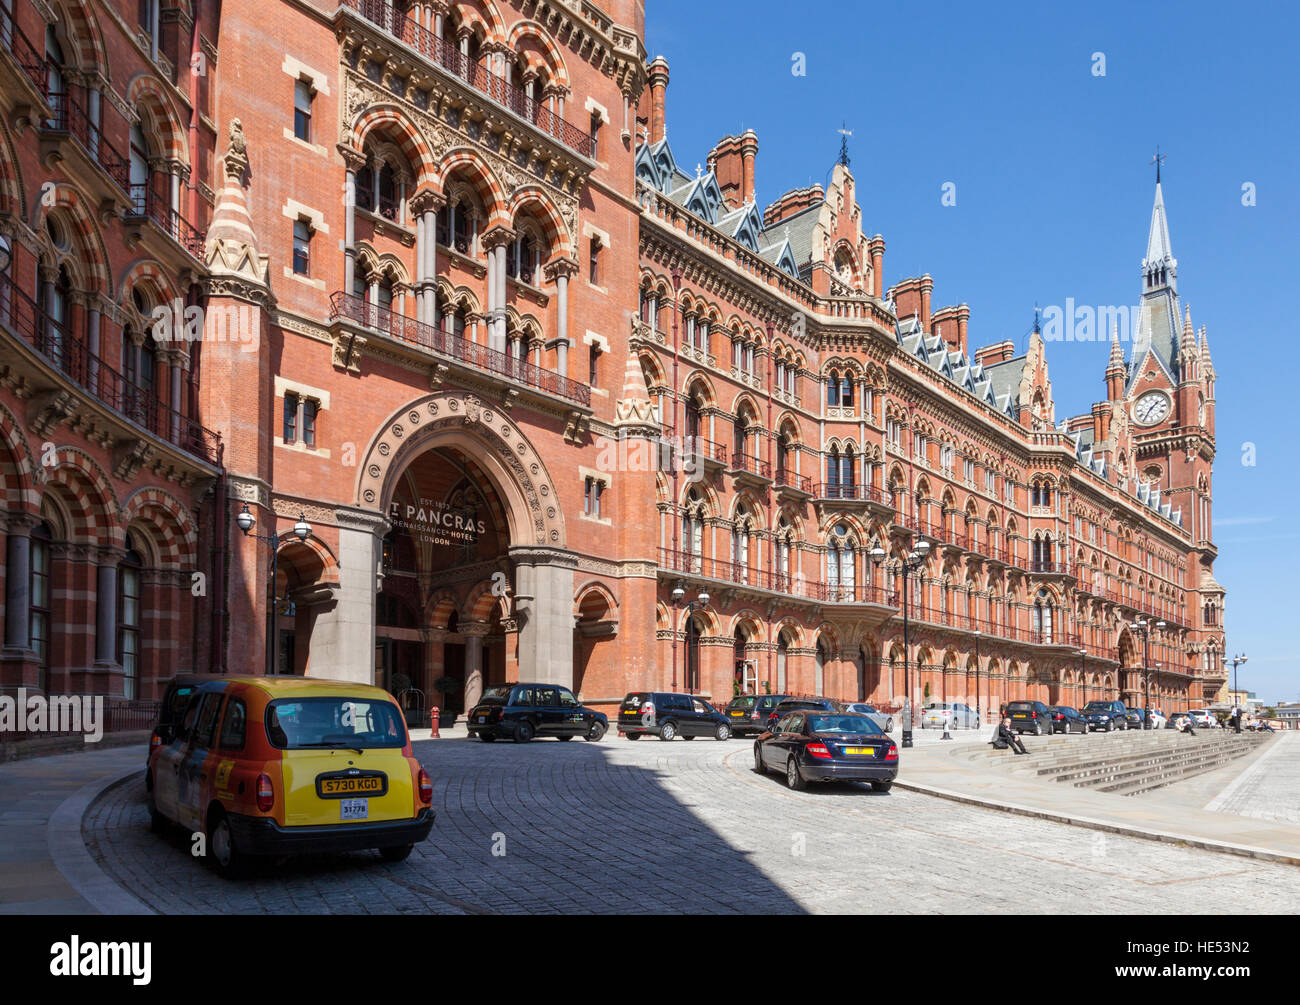 Fassade und Eingang zum St Pancras International Railway Station, London, England, UK Stockfoto